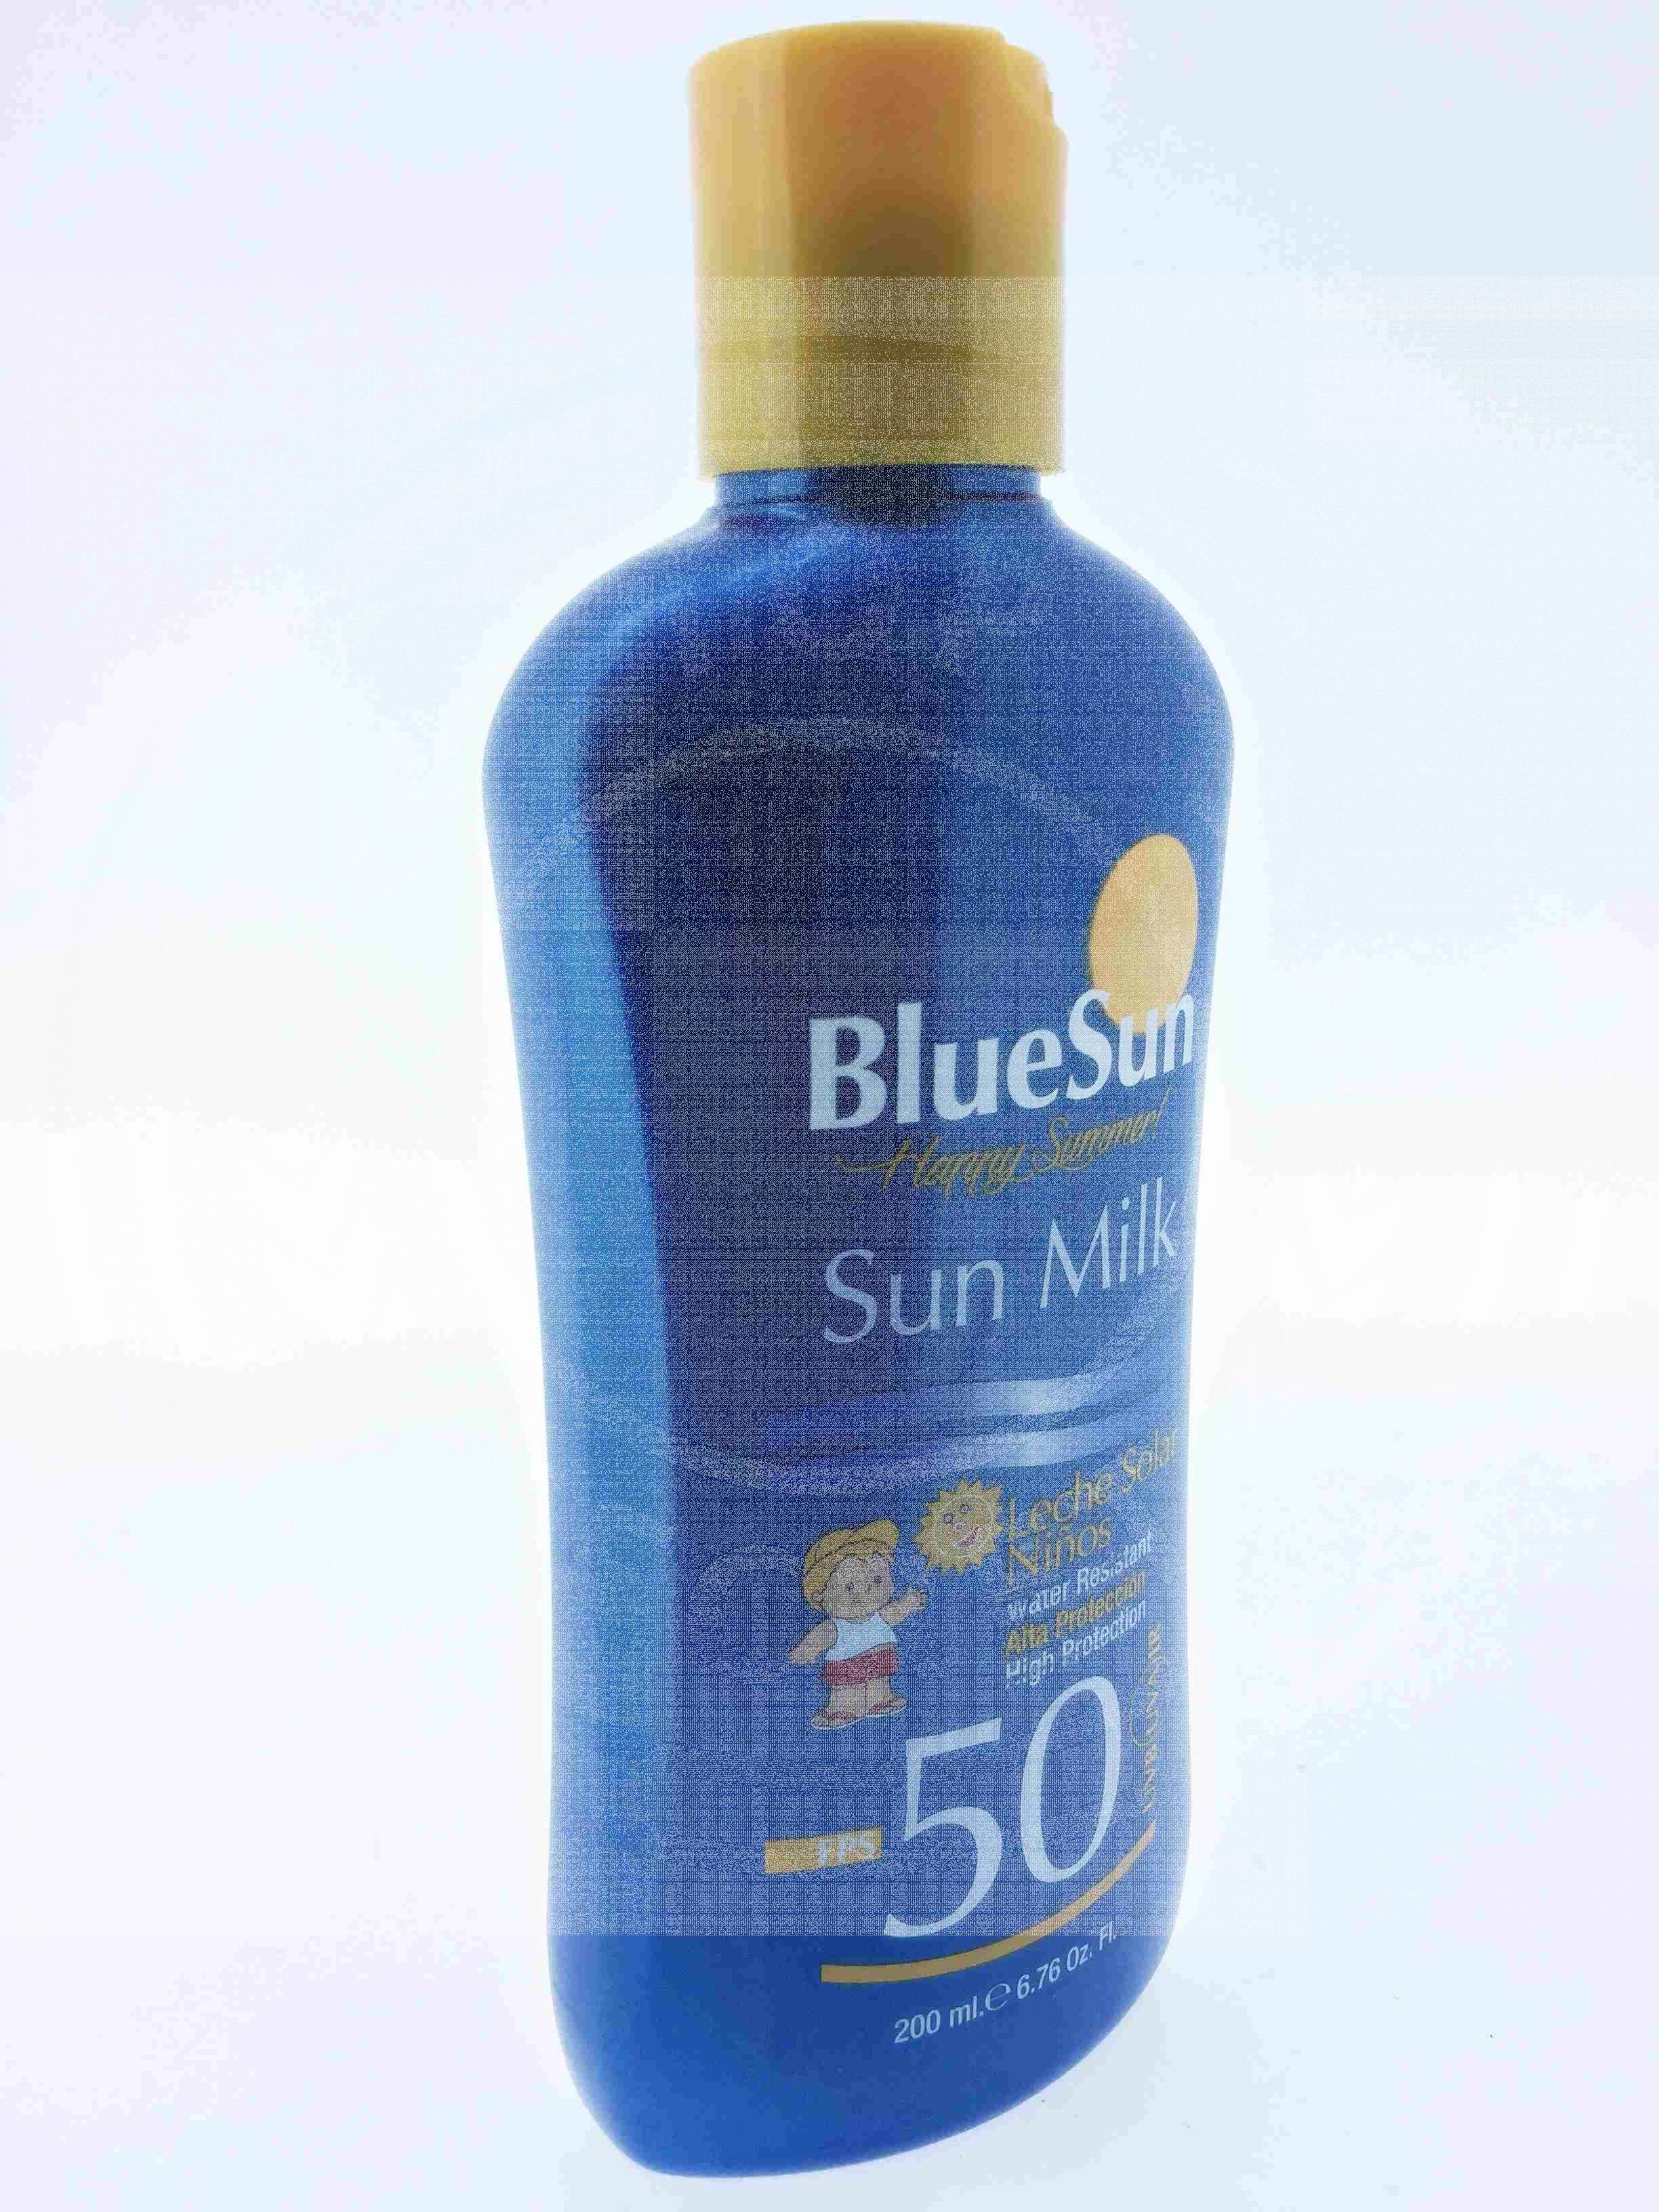 Green and Blue Sun Logo - BLUESUN HAPPY SUMMER SUN MILK SPF 50 200ML LECHE SOLAR NIÑOS | eBay